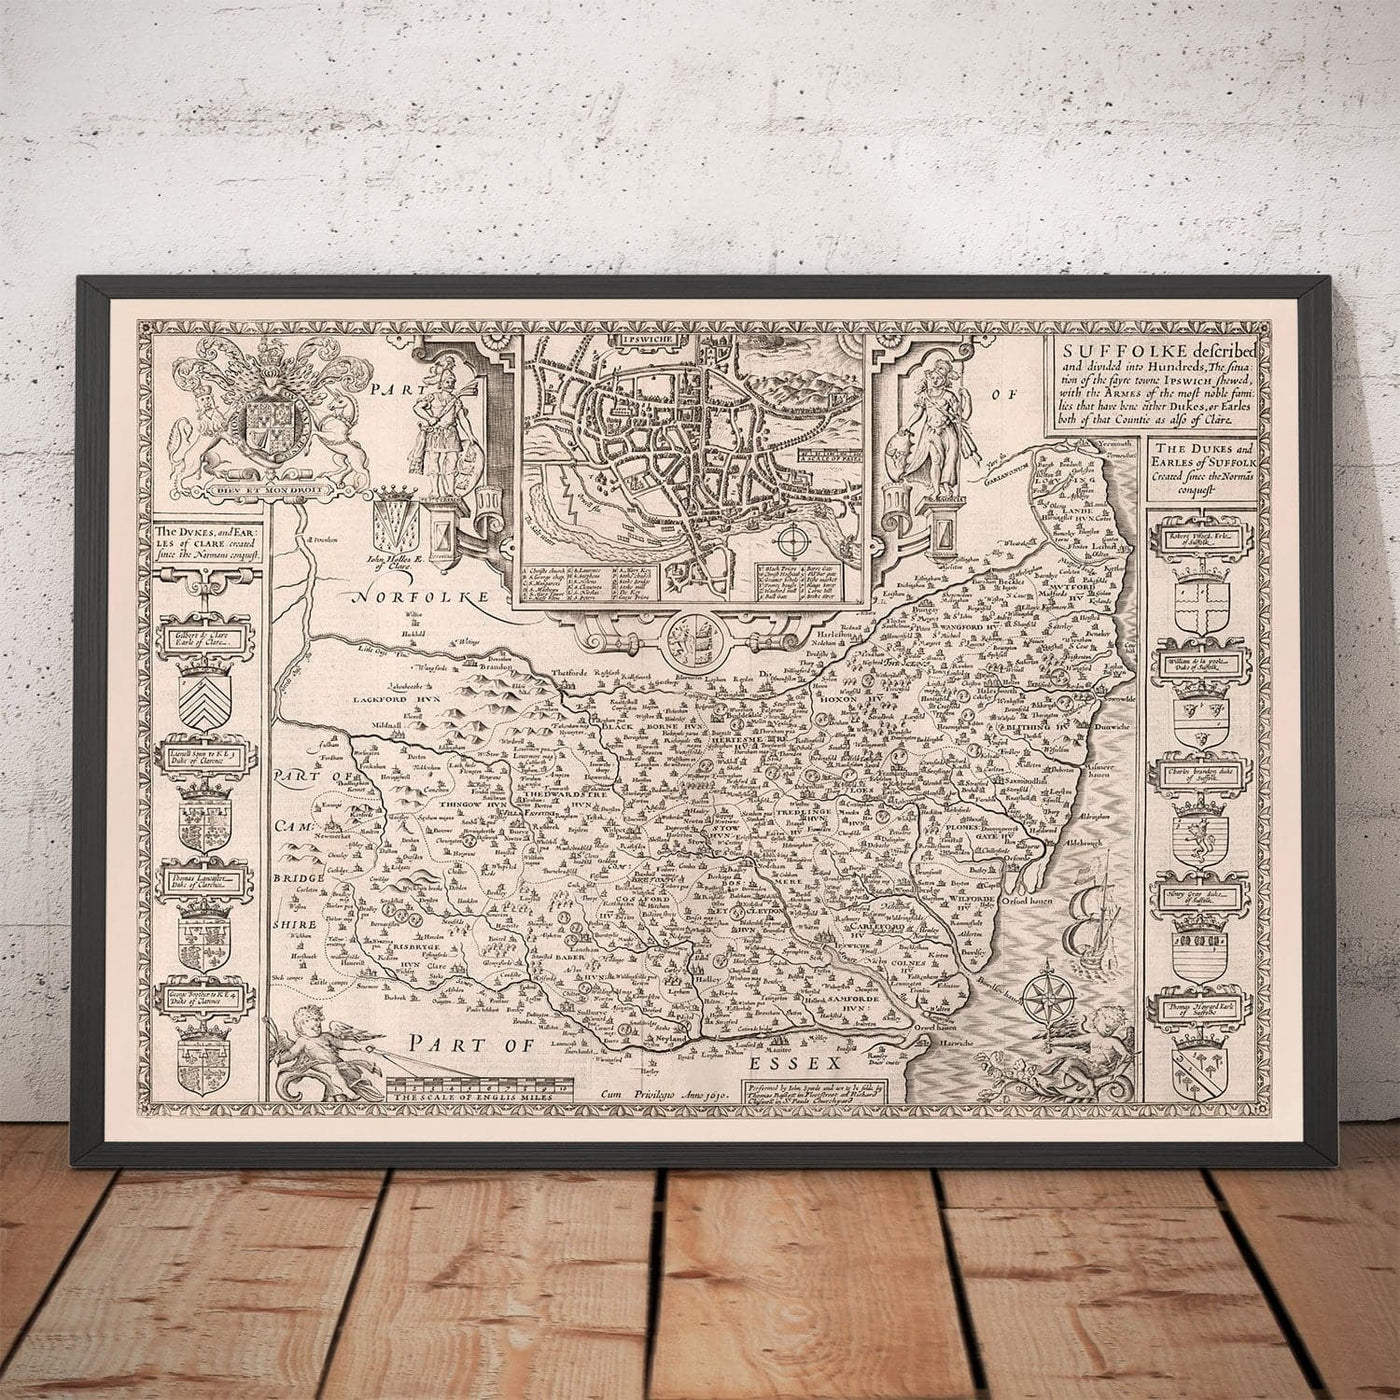 Viejo mapa monocromo de Suffolk, 1611 por velocidad - Ipswich, Lowestoft, Bury St Edmunds, Haverhill, Felixstowe